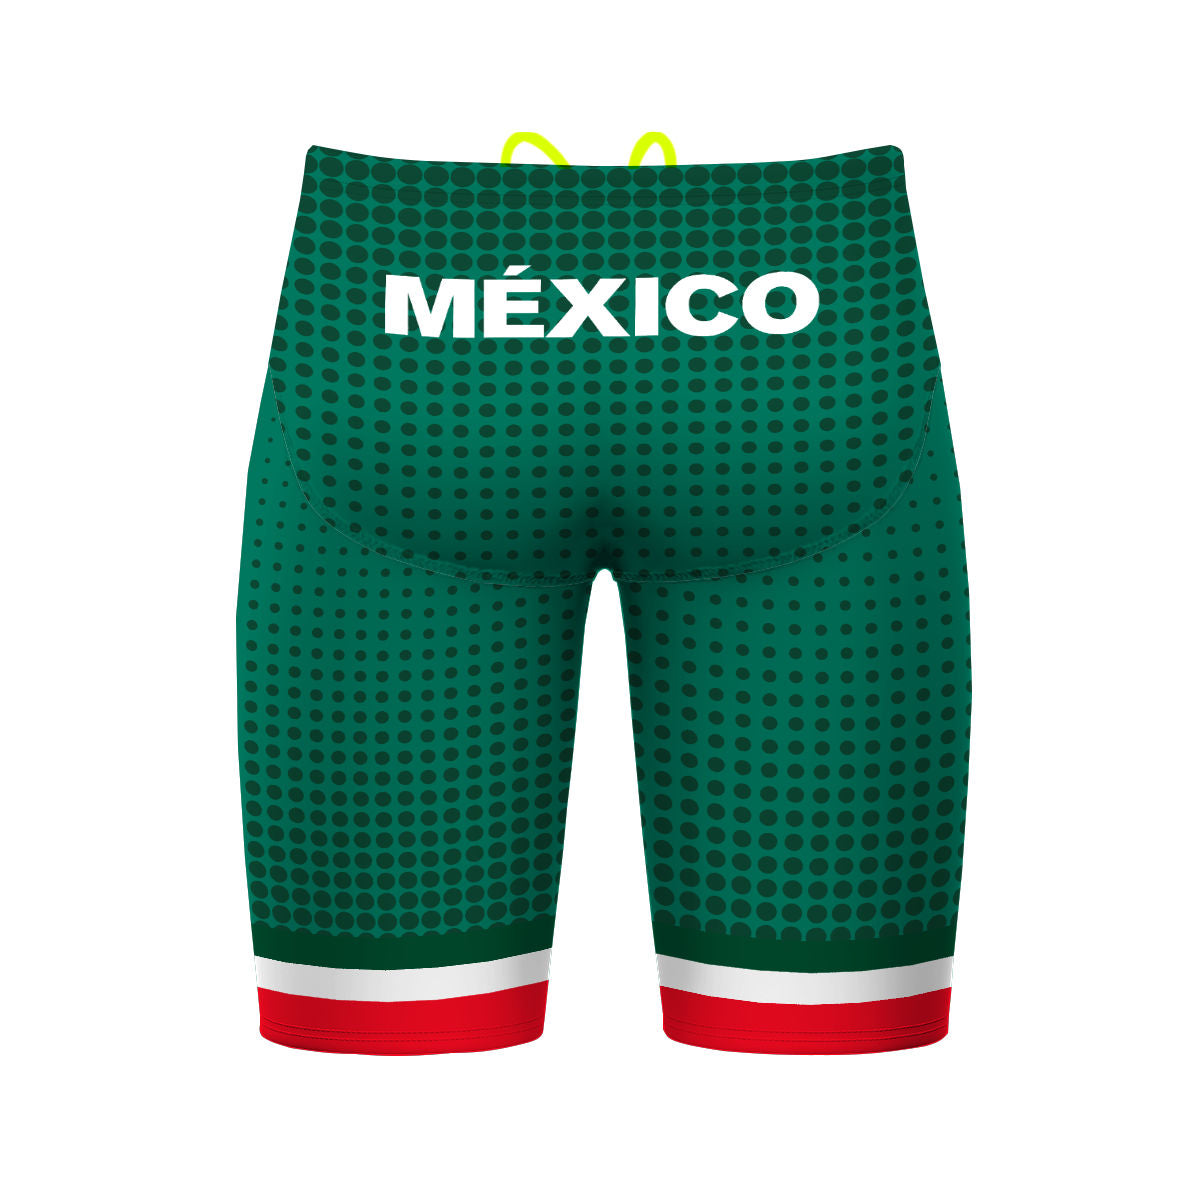 GO MEXICO - Atlas Jammer Swimsuit